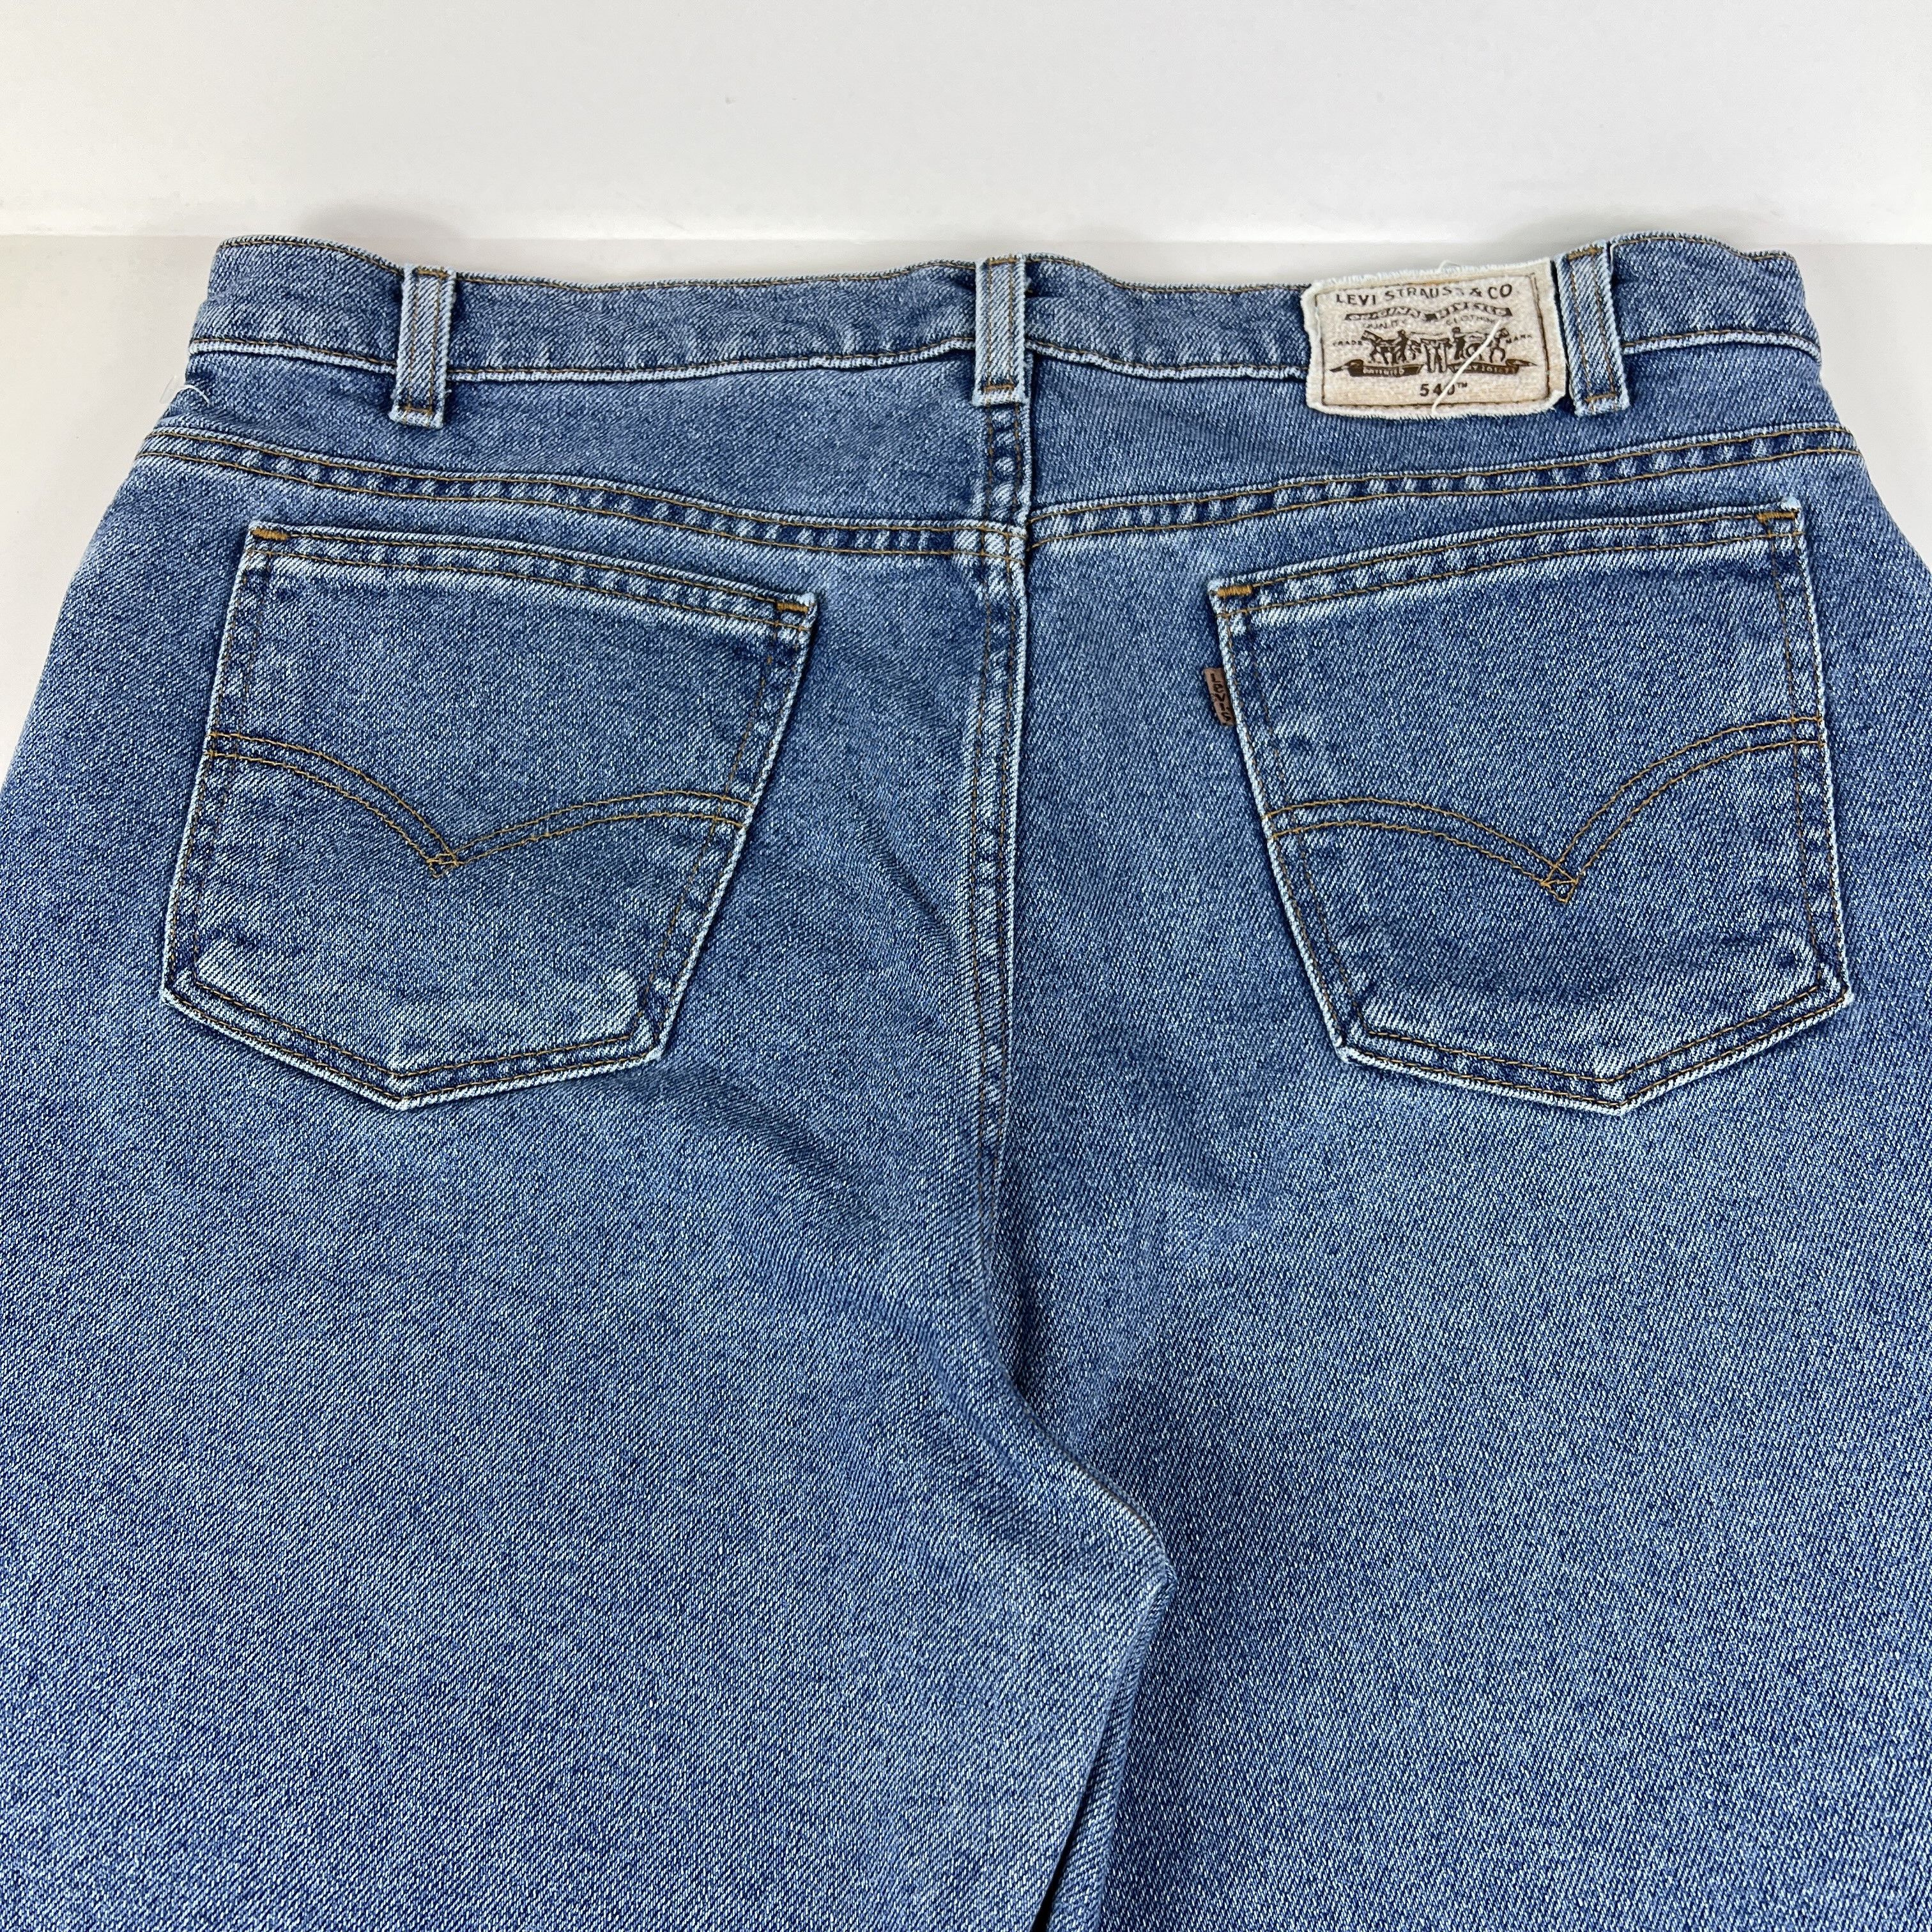 Vintage VTG 90s Levi's Jeans 540 Flex Relaxed Straight Blue Denim Size US 36 / EU 52 - 10 Thumbnail